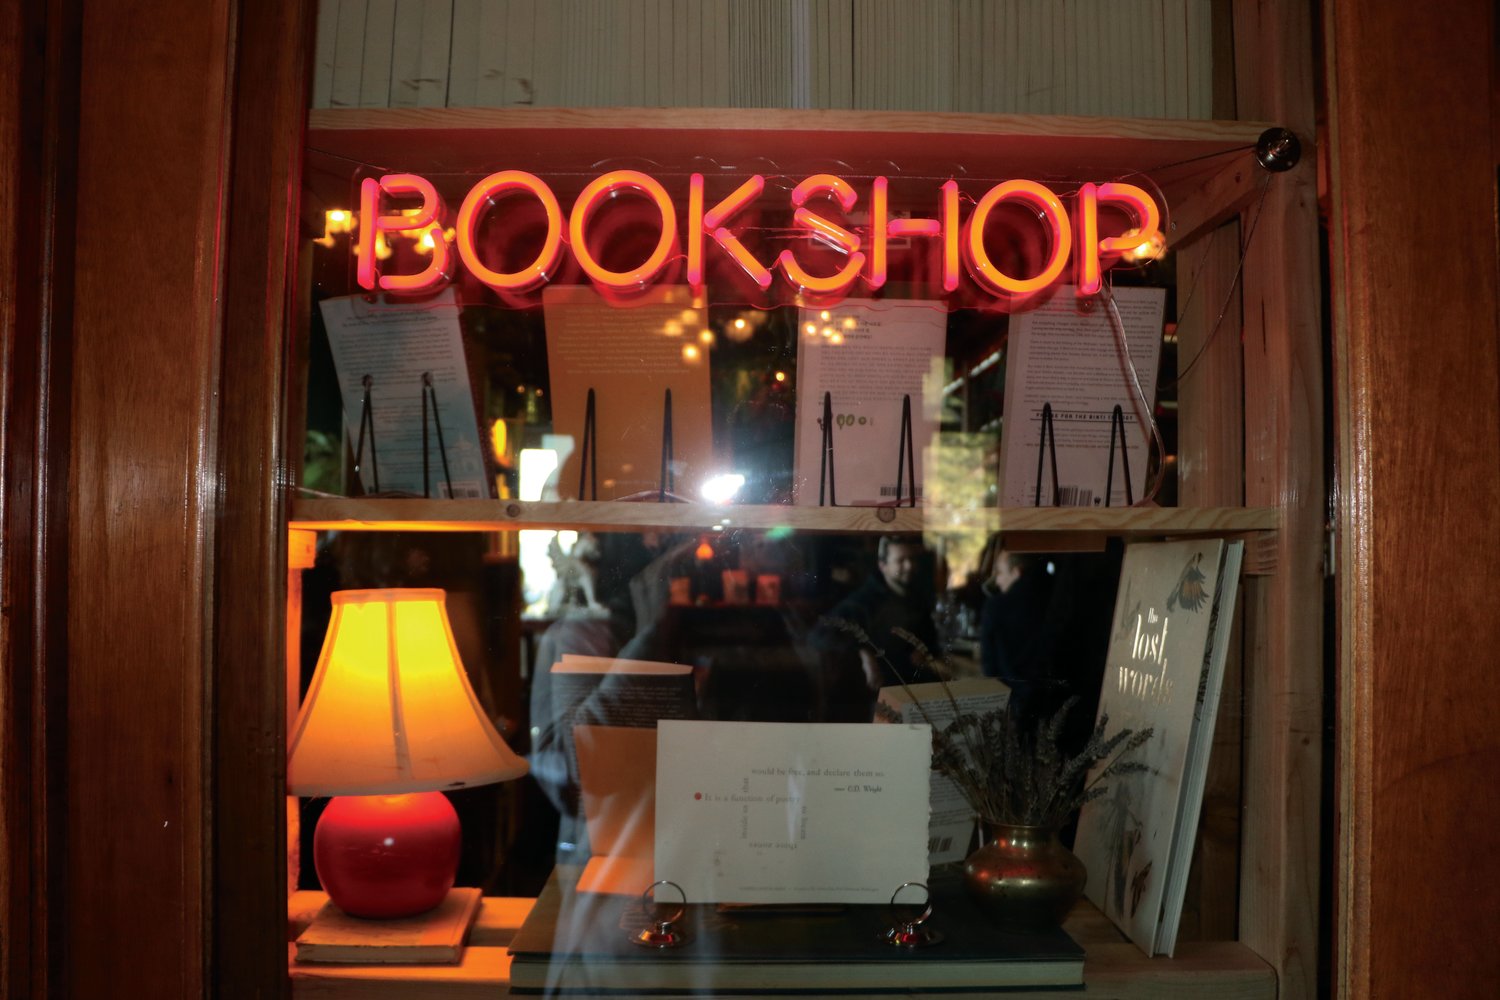 Winter Texts’ new brick-and-mortar bookshop has full menu and craft cocktails.